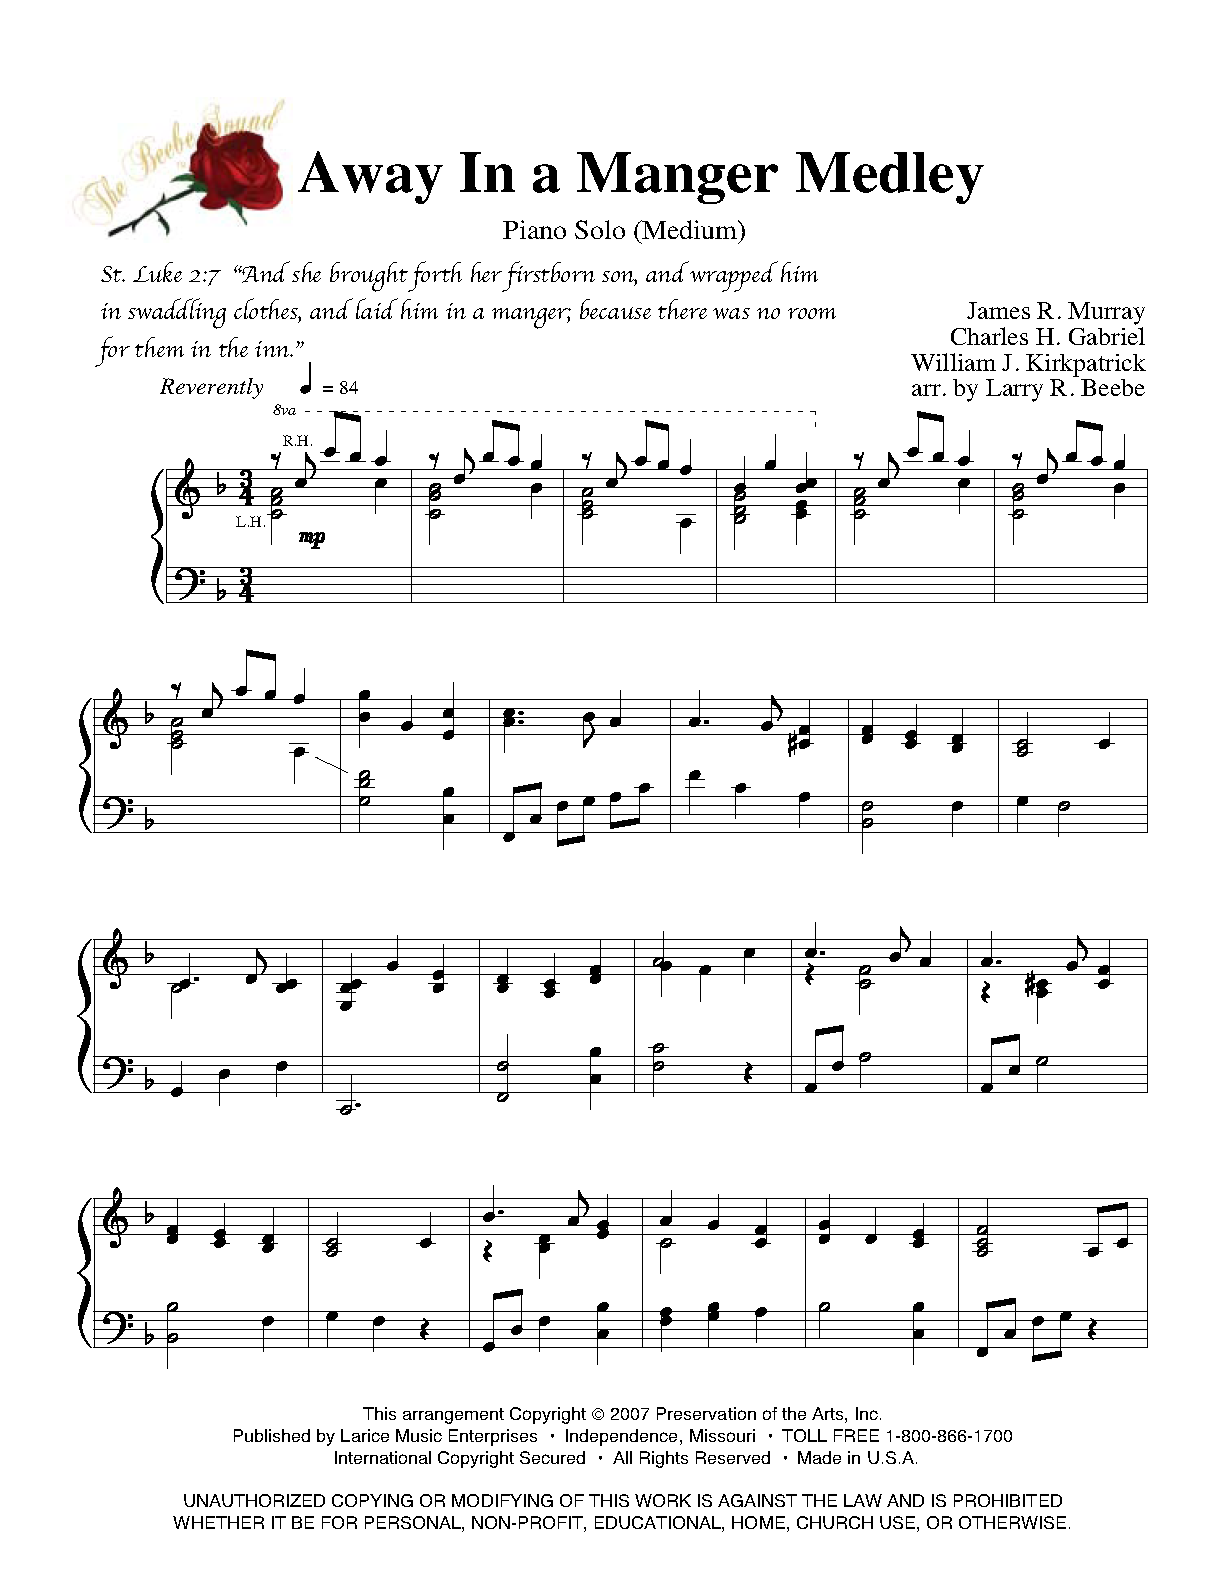 Christmas Medley Piano Sheet Music Free - Music Sheet Collection